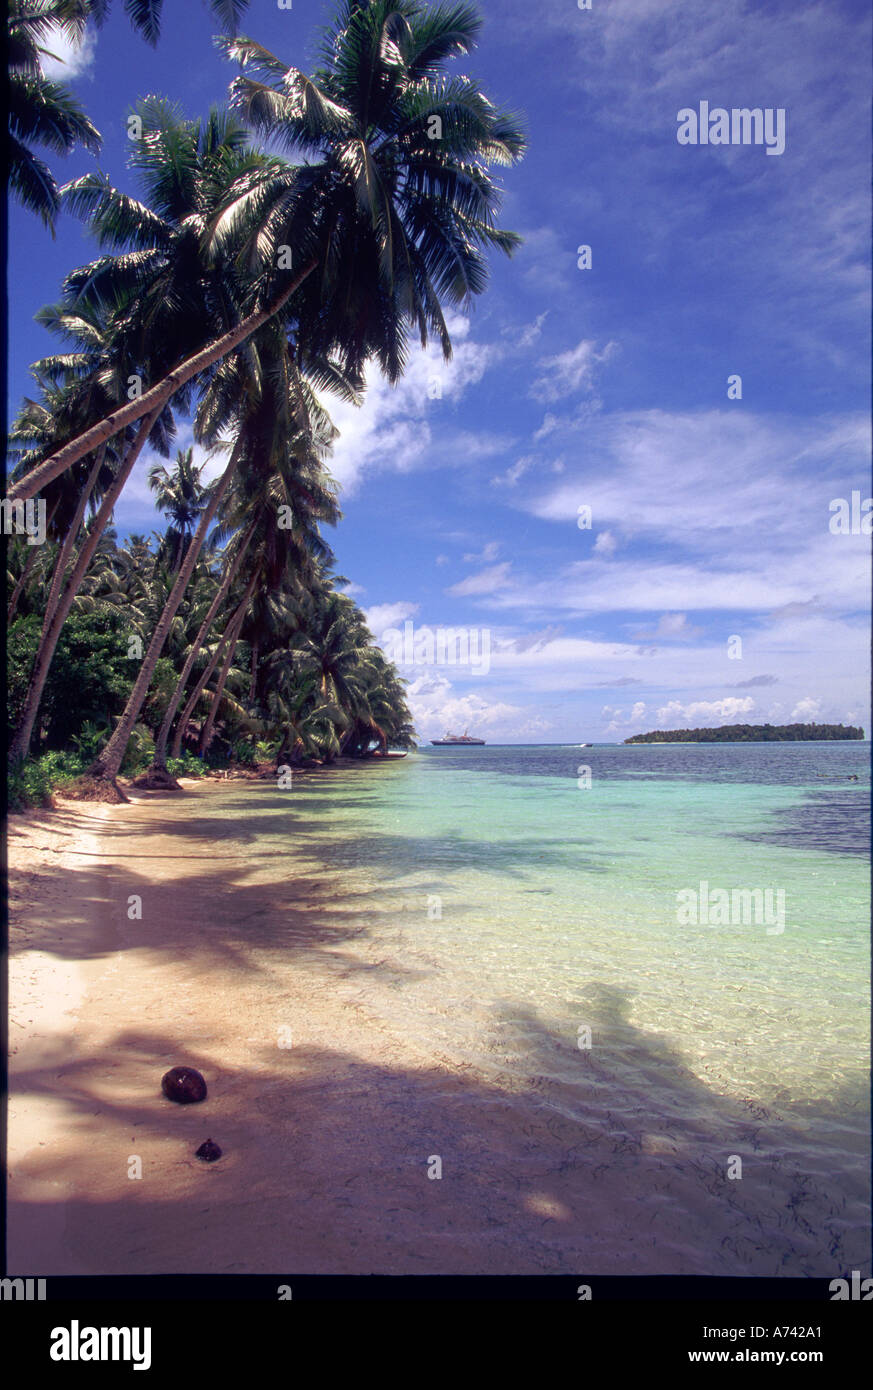 Ifalik island hi-res stock photography and images - Alamy